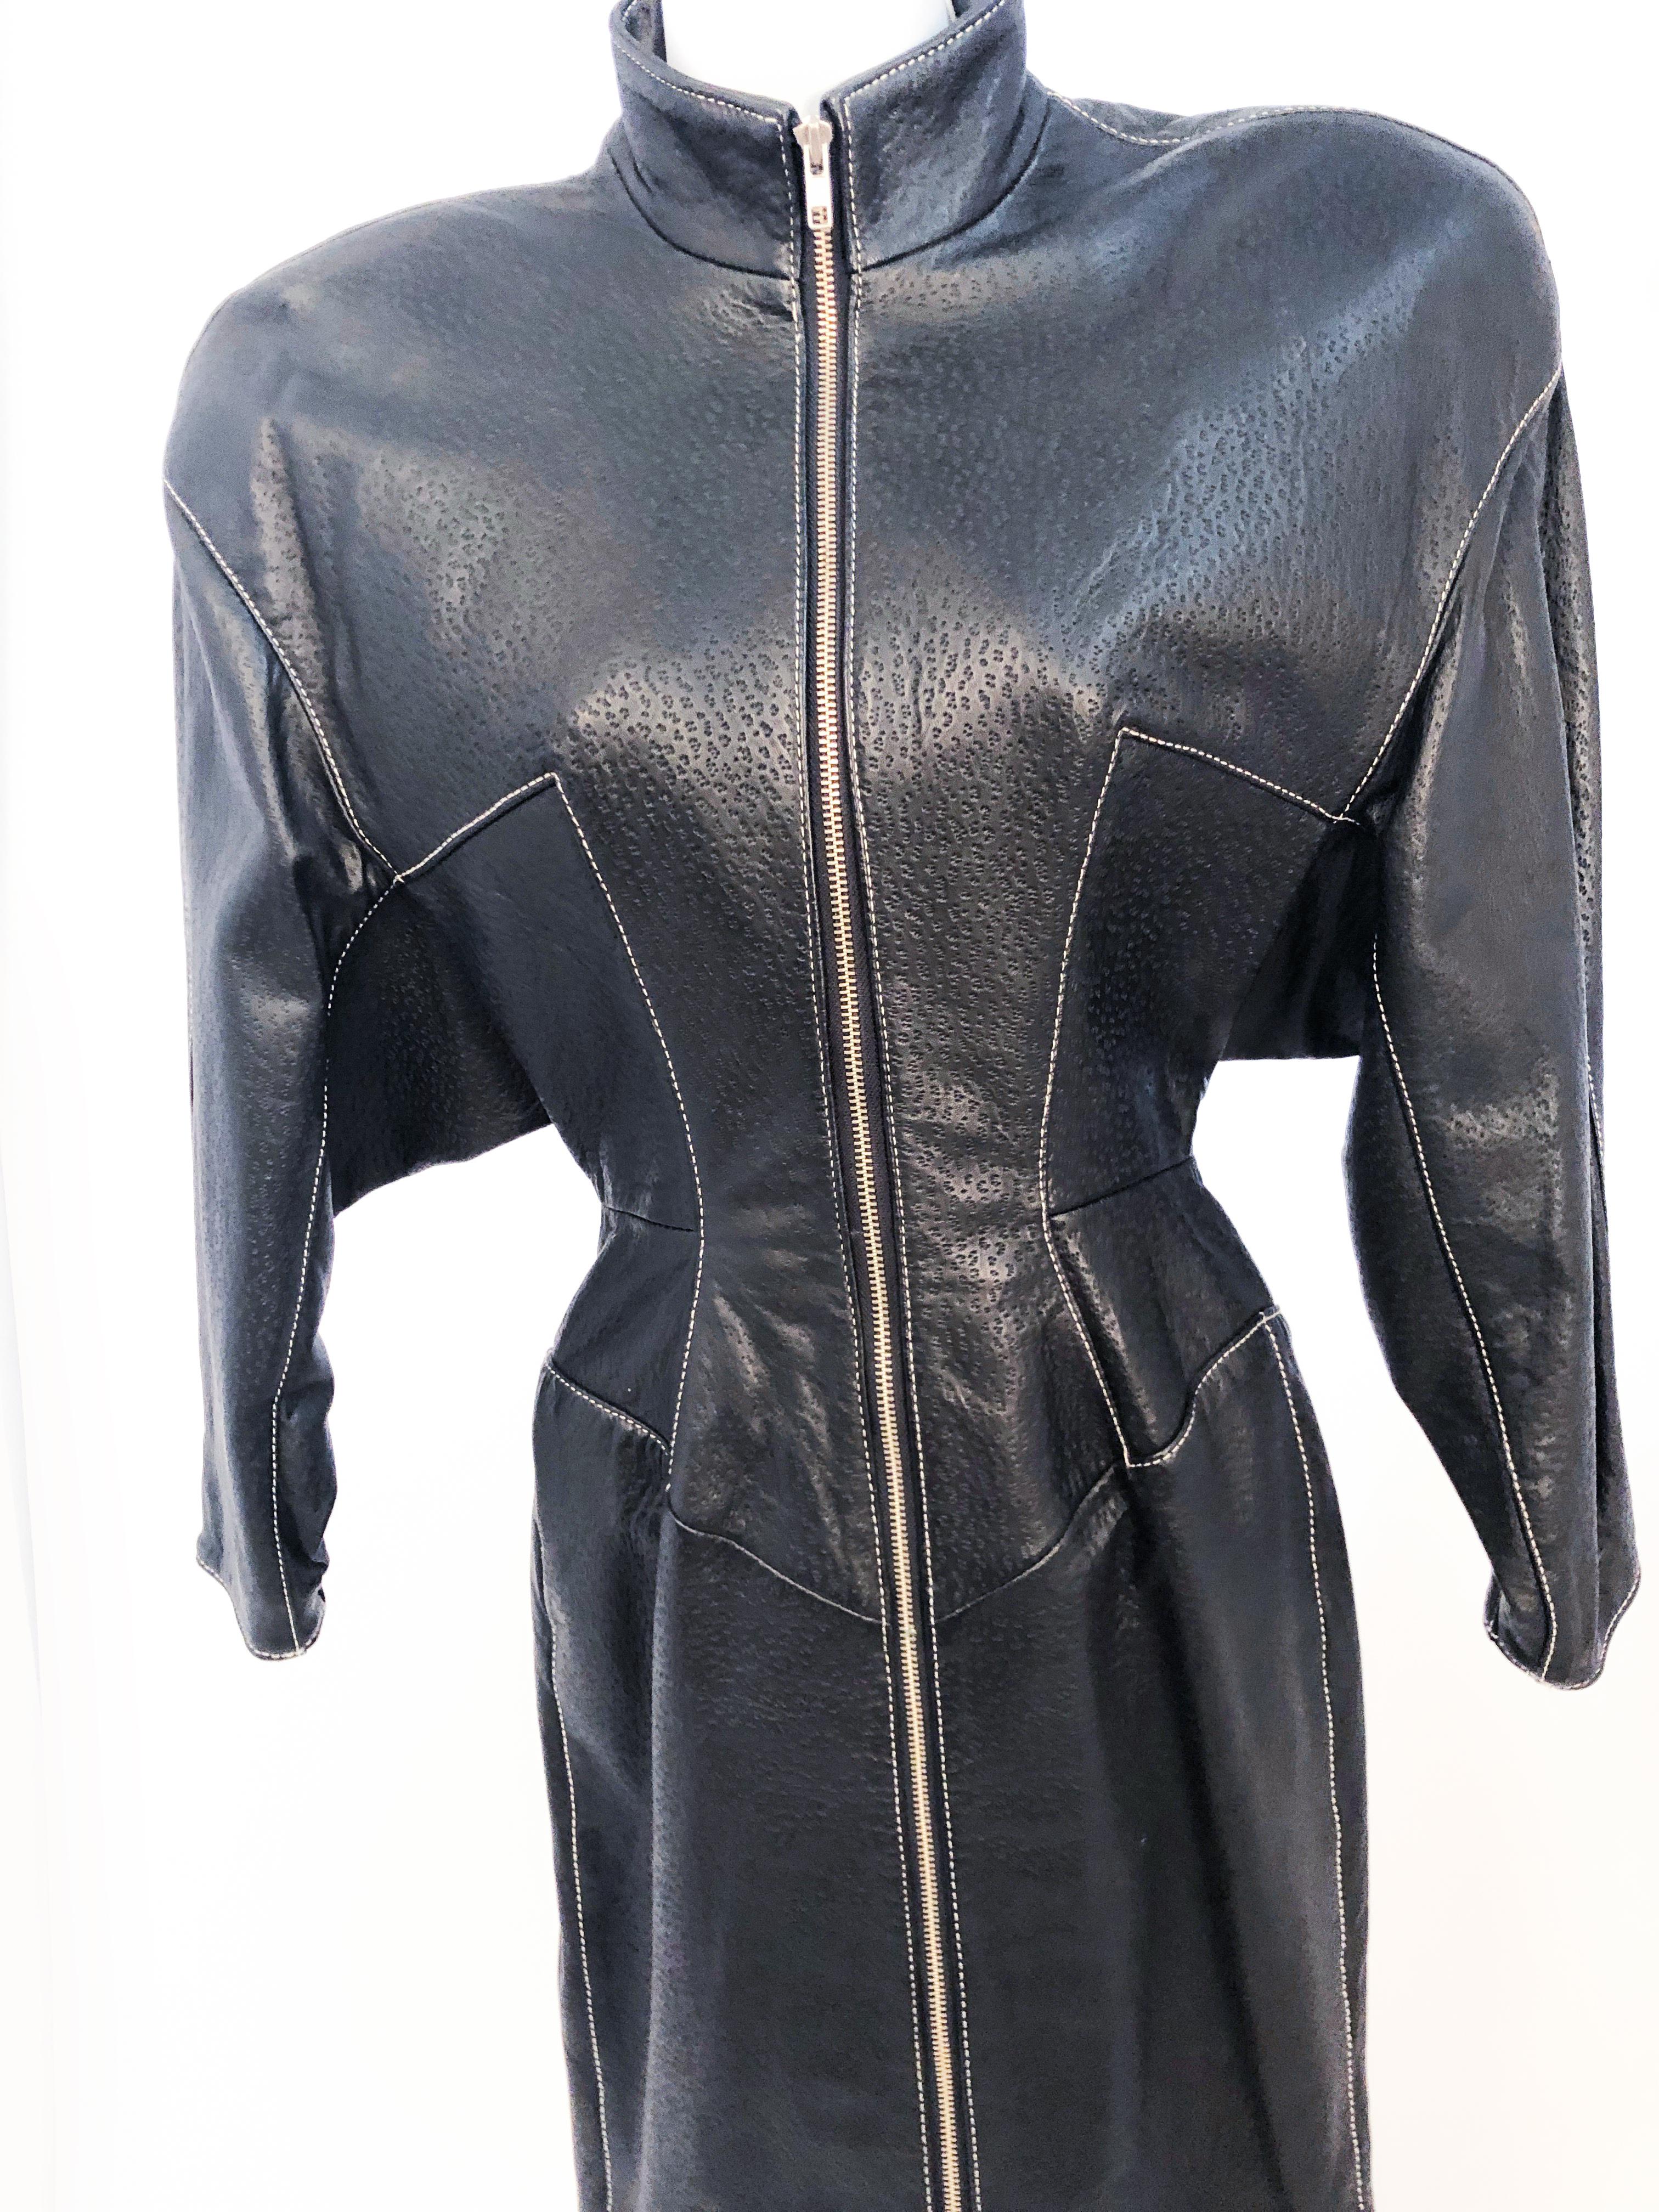 80s leather dress